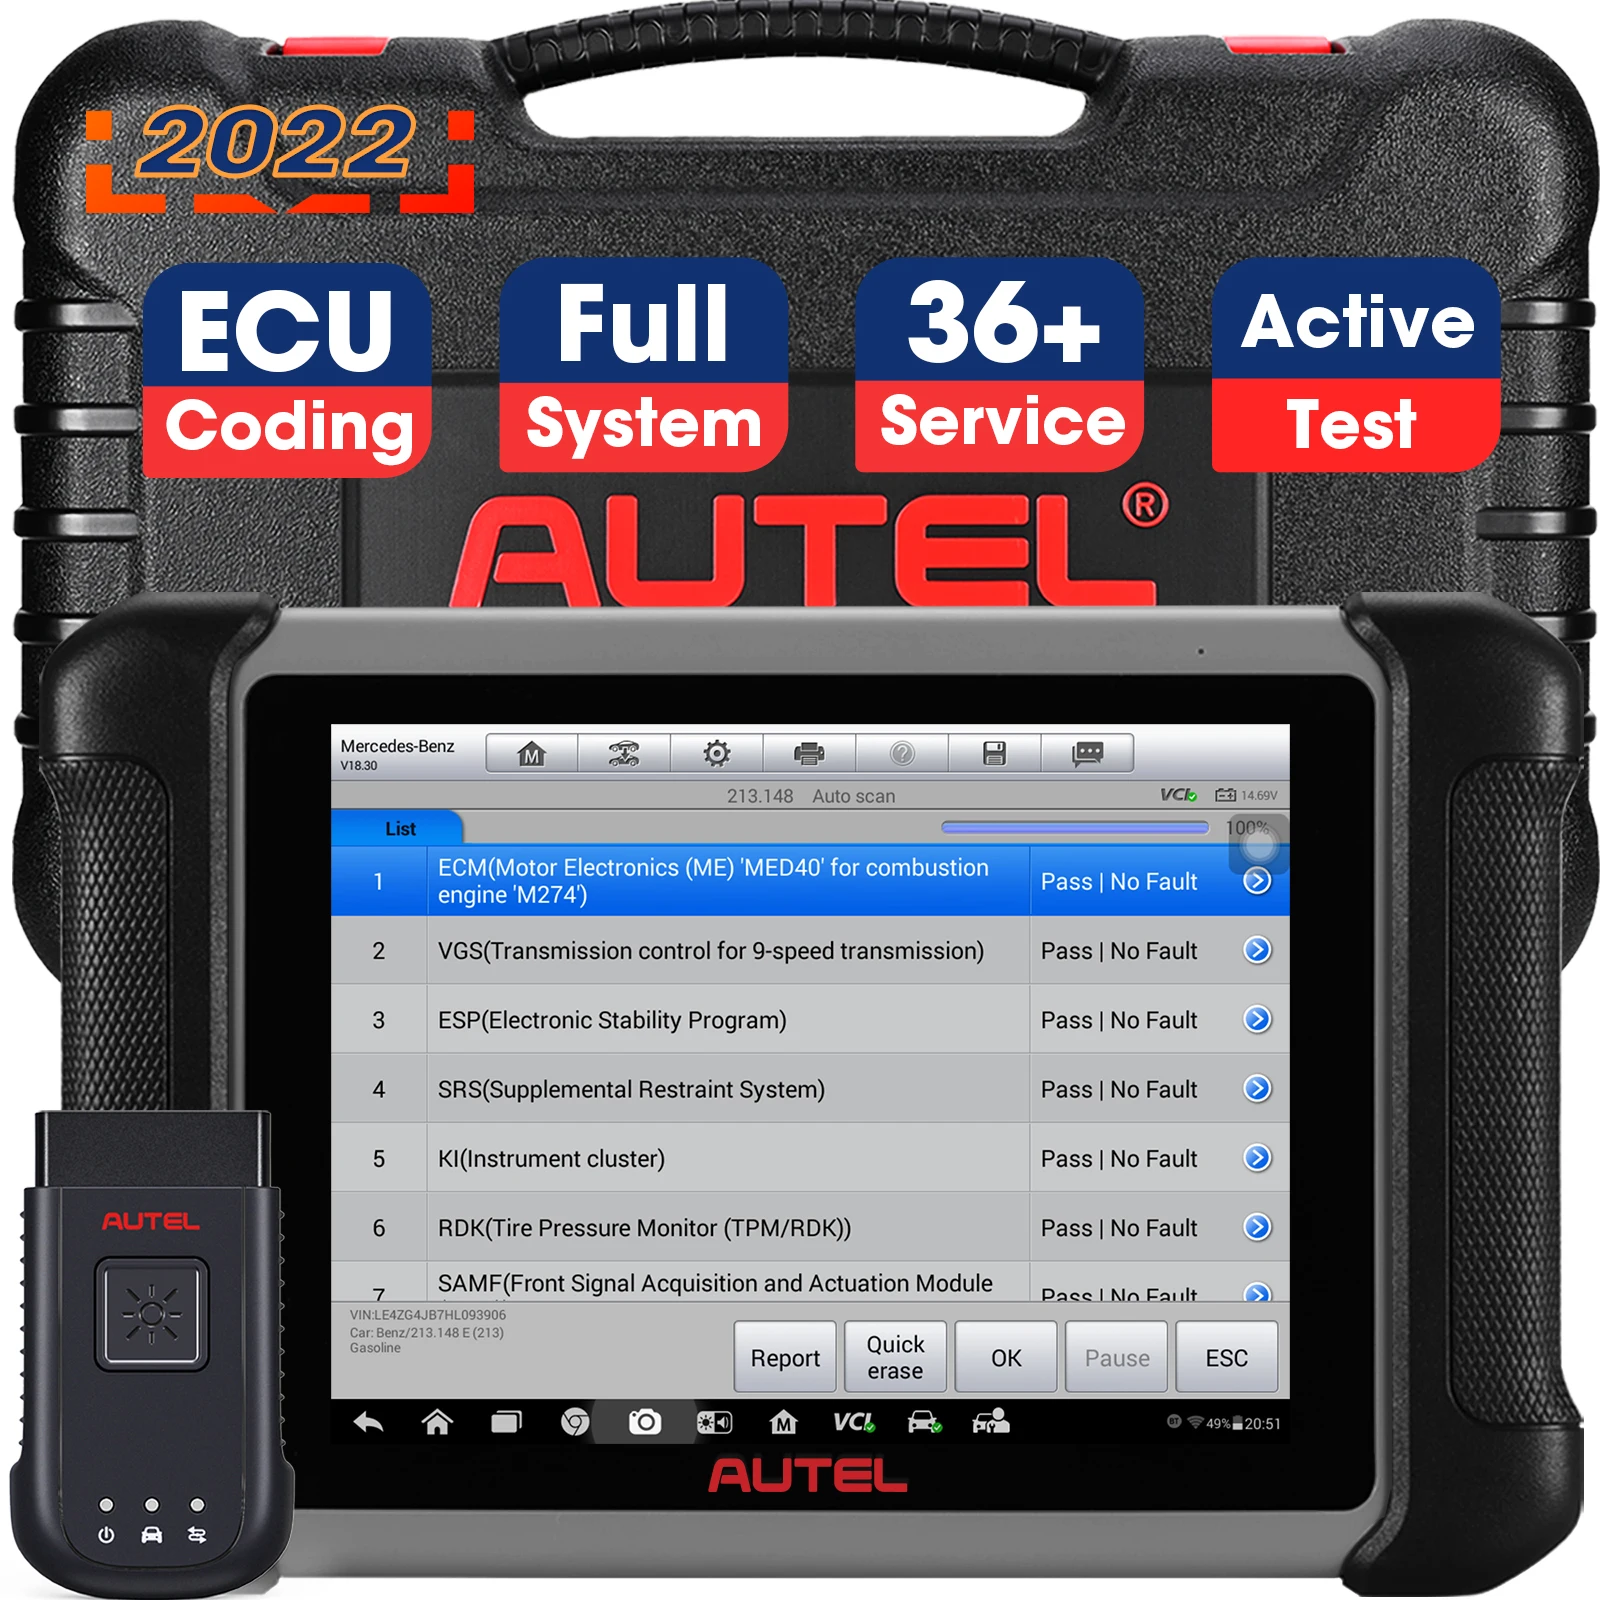 Autel أدوات التشخيص MaxiSys MS906BT OBD2 الماسح الضوئي المهنية السيارات أداة مسح ضوئي بلوتوث ECU الترميز ترقية MS906